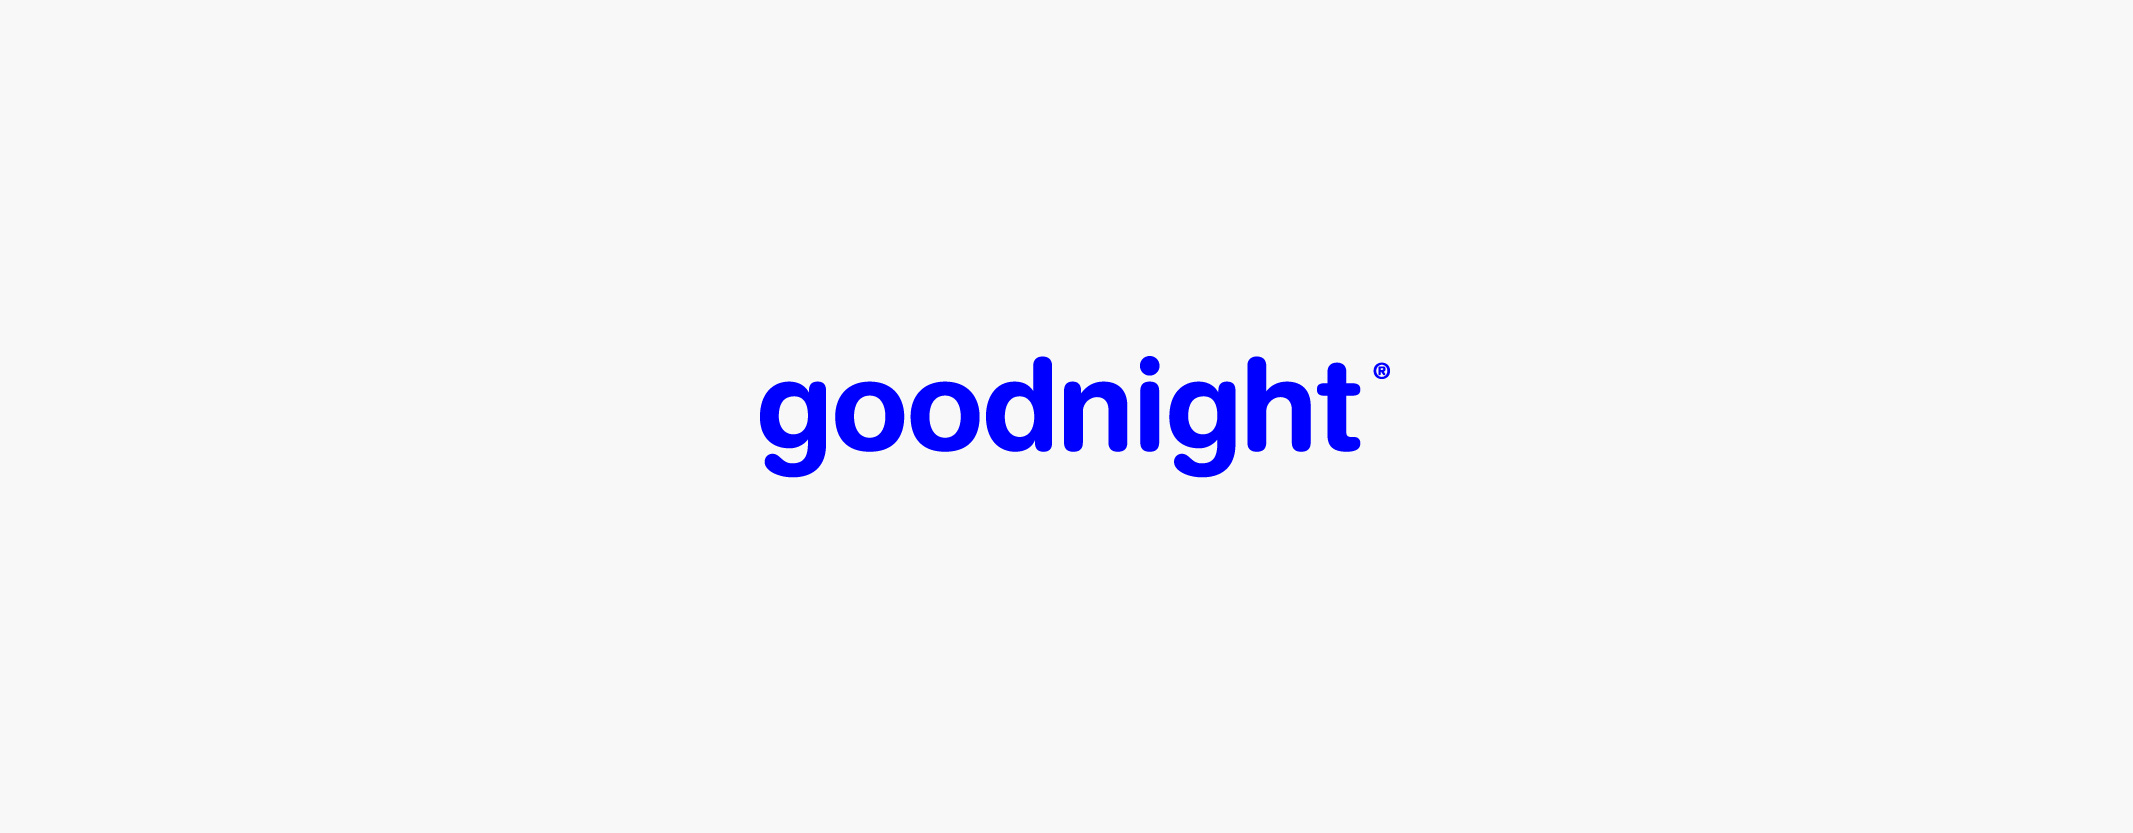 41_logos_goodnight